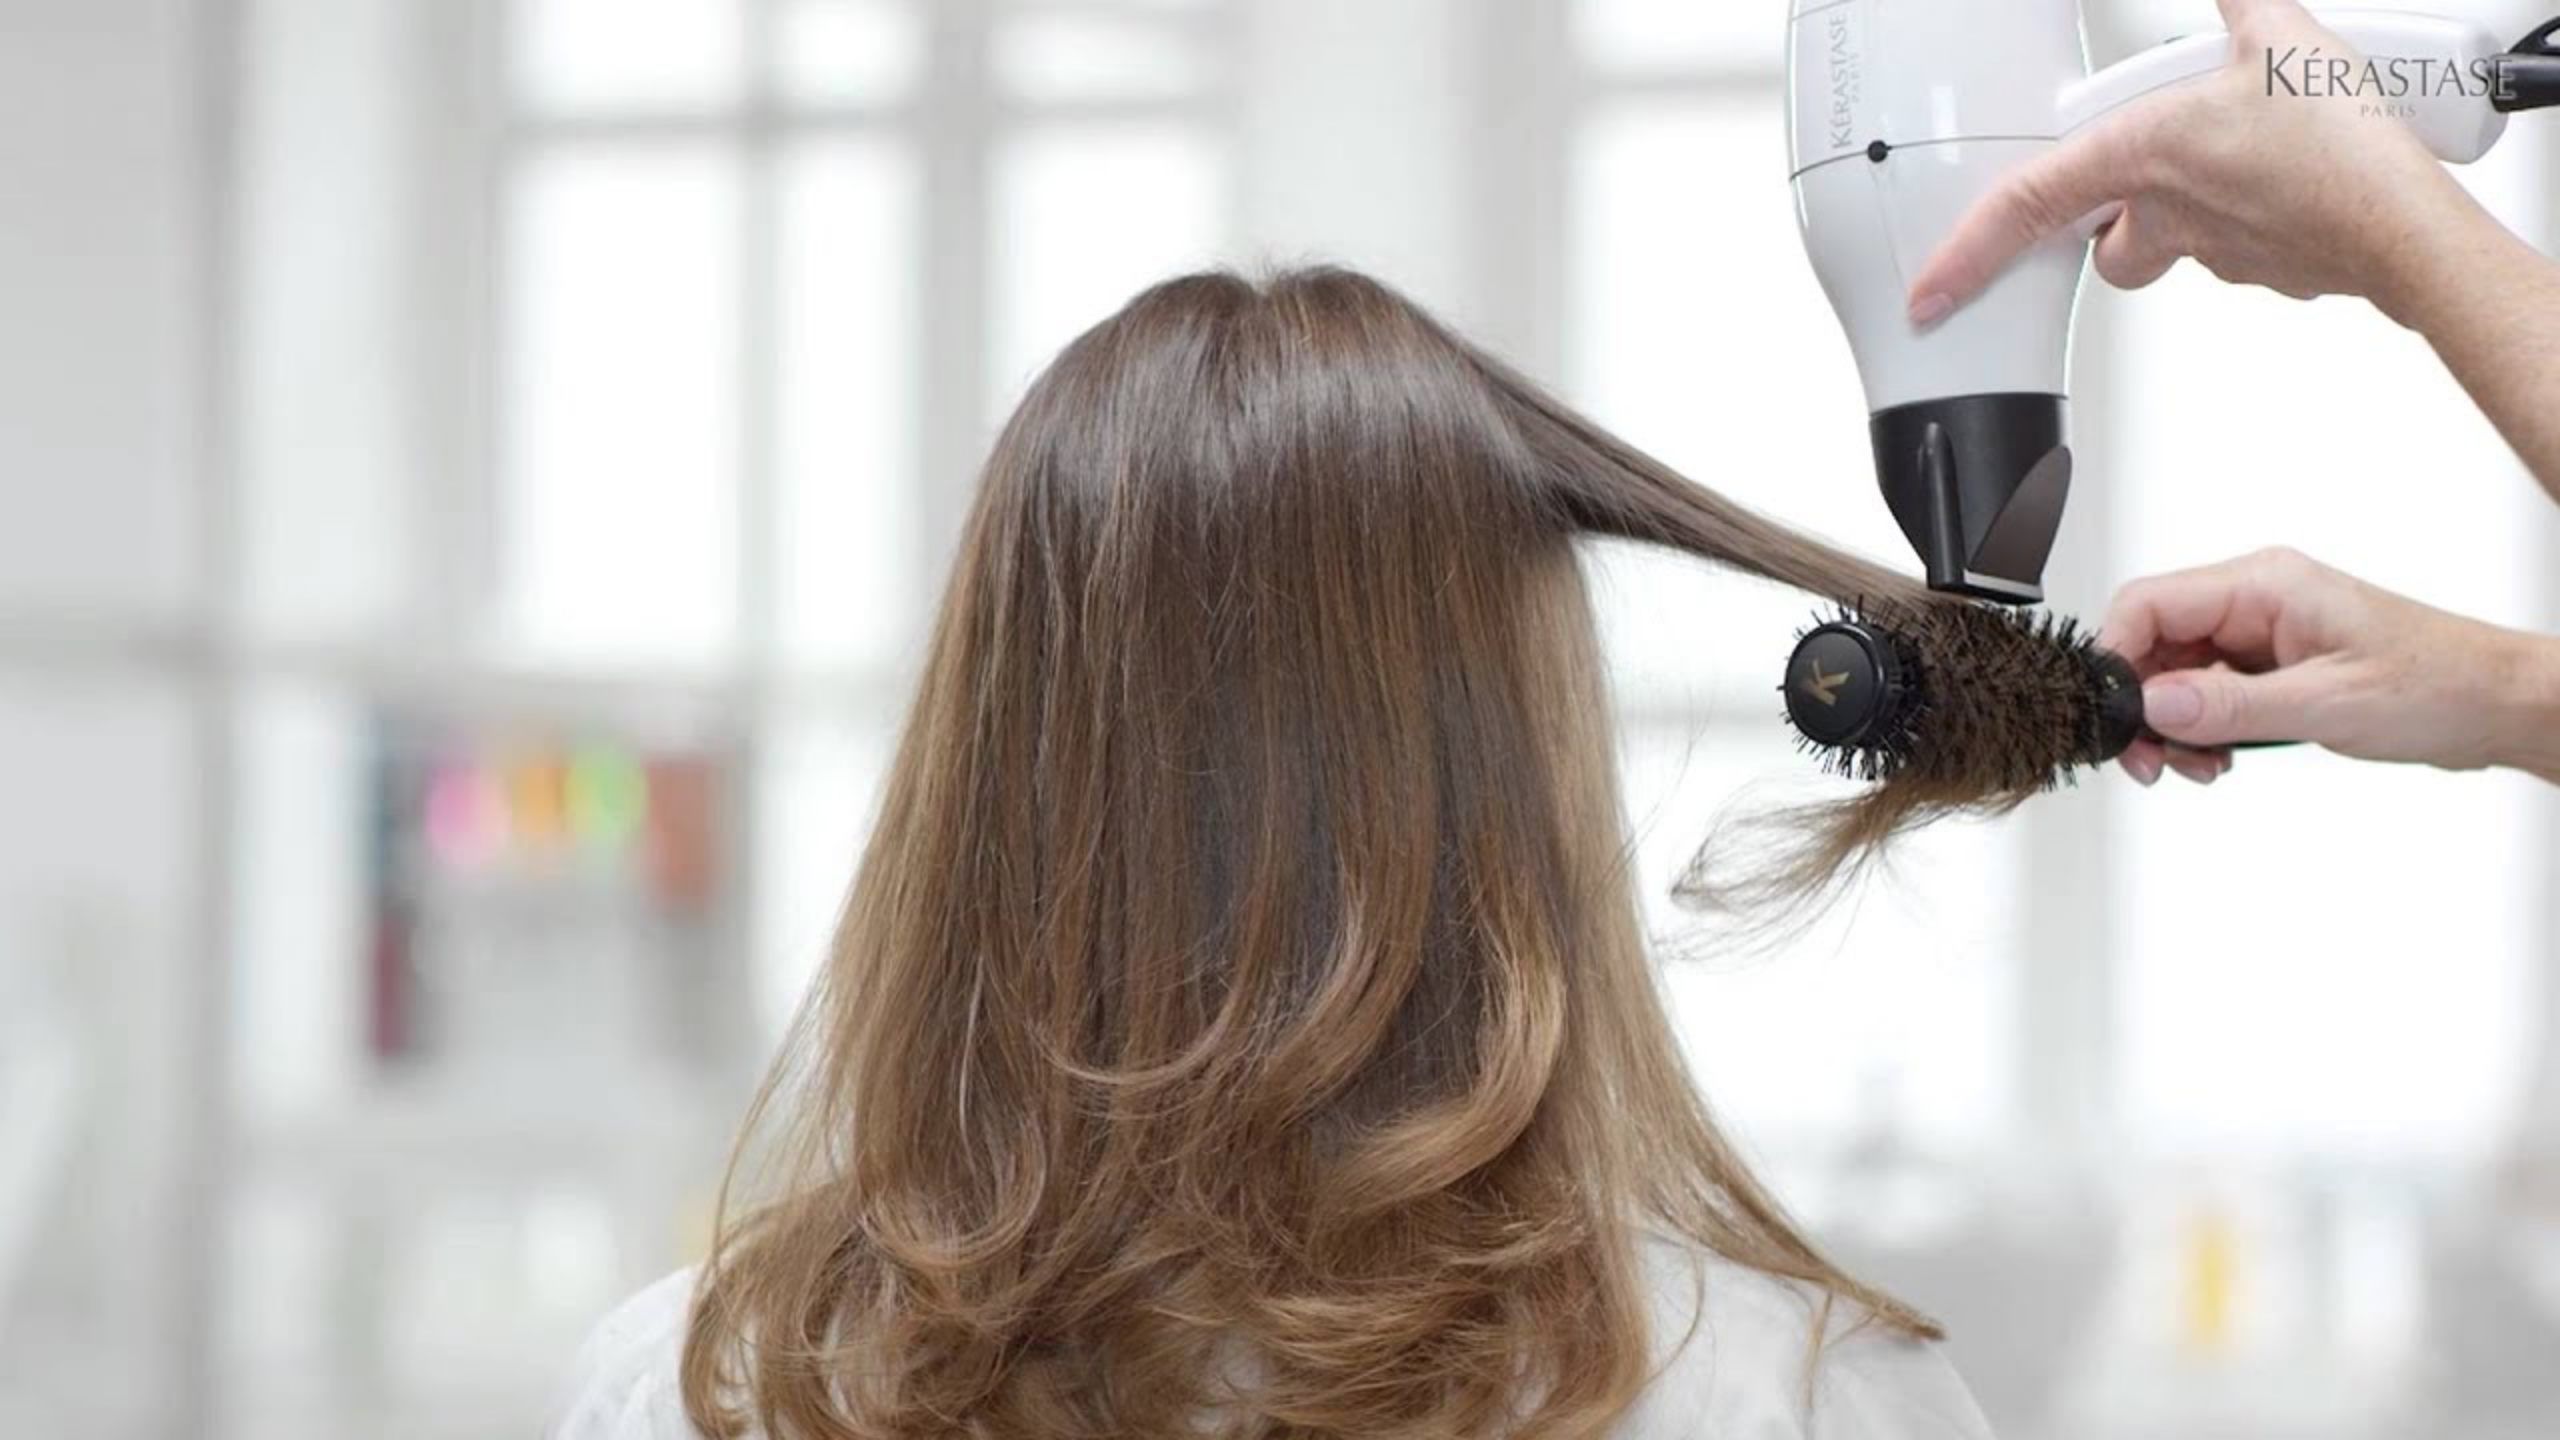 Spa review: A quick hair transformation at Kérastase Hair Spa by La Vie